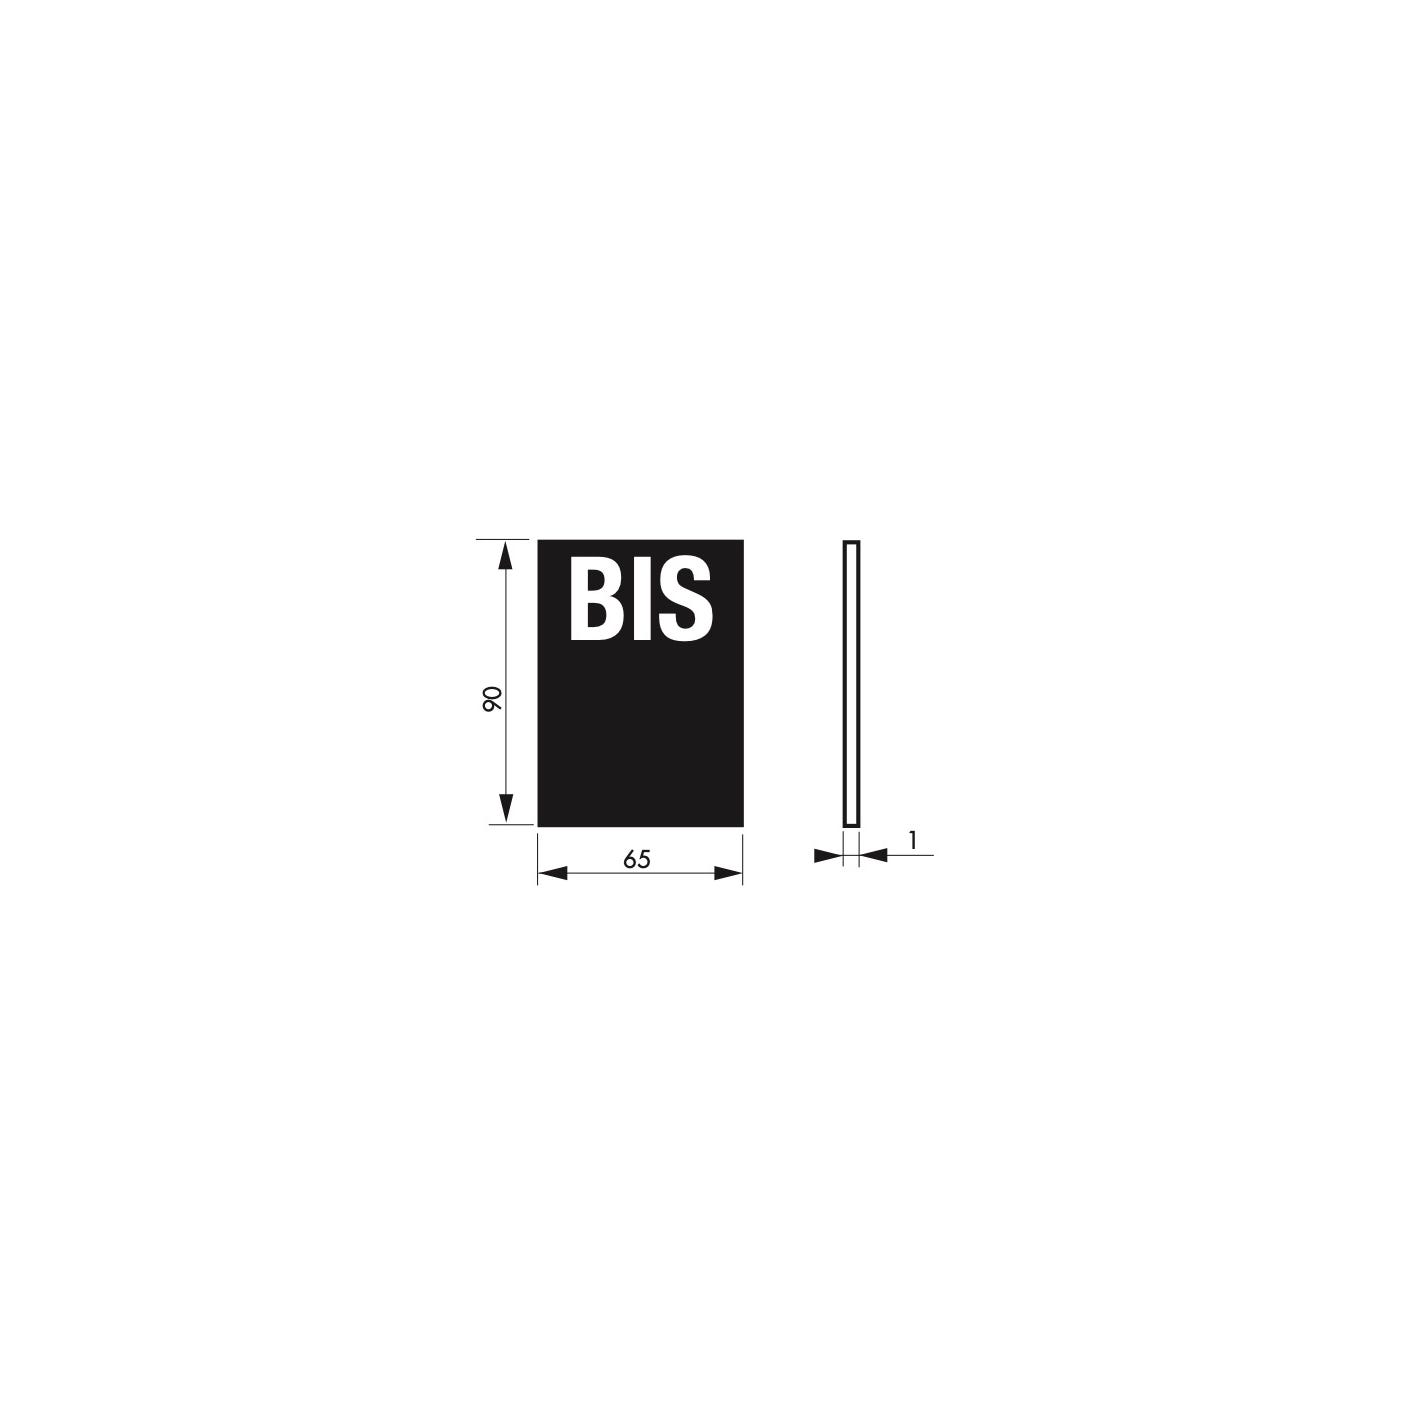 THIRARD - Plaque signalétique "BIS" 65x90mm avec adhésif - THIRARD 1